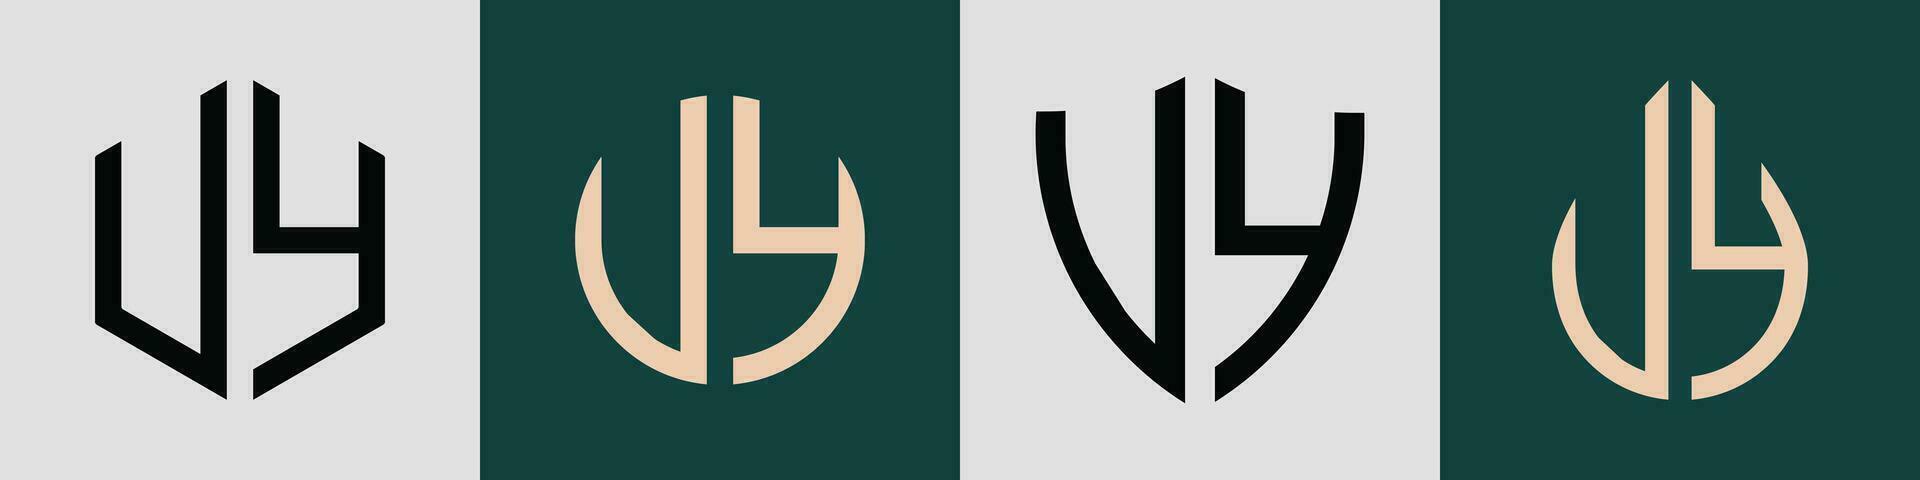 Creative simple Initial Letters UY Logo Designs Bundle. vector